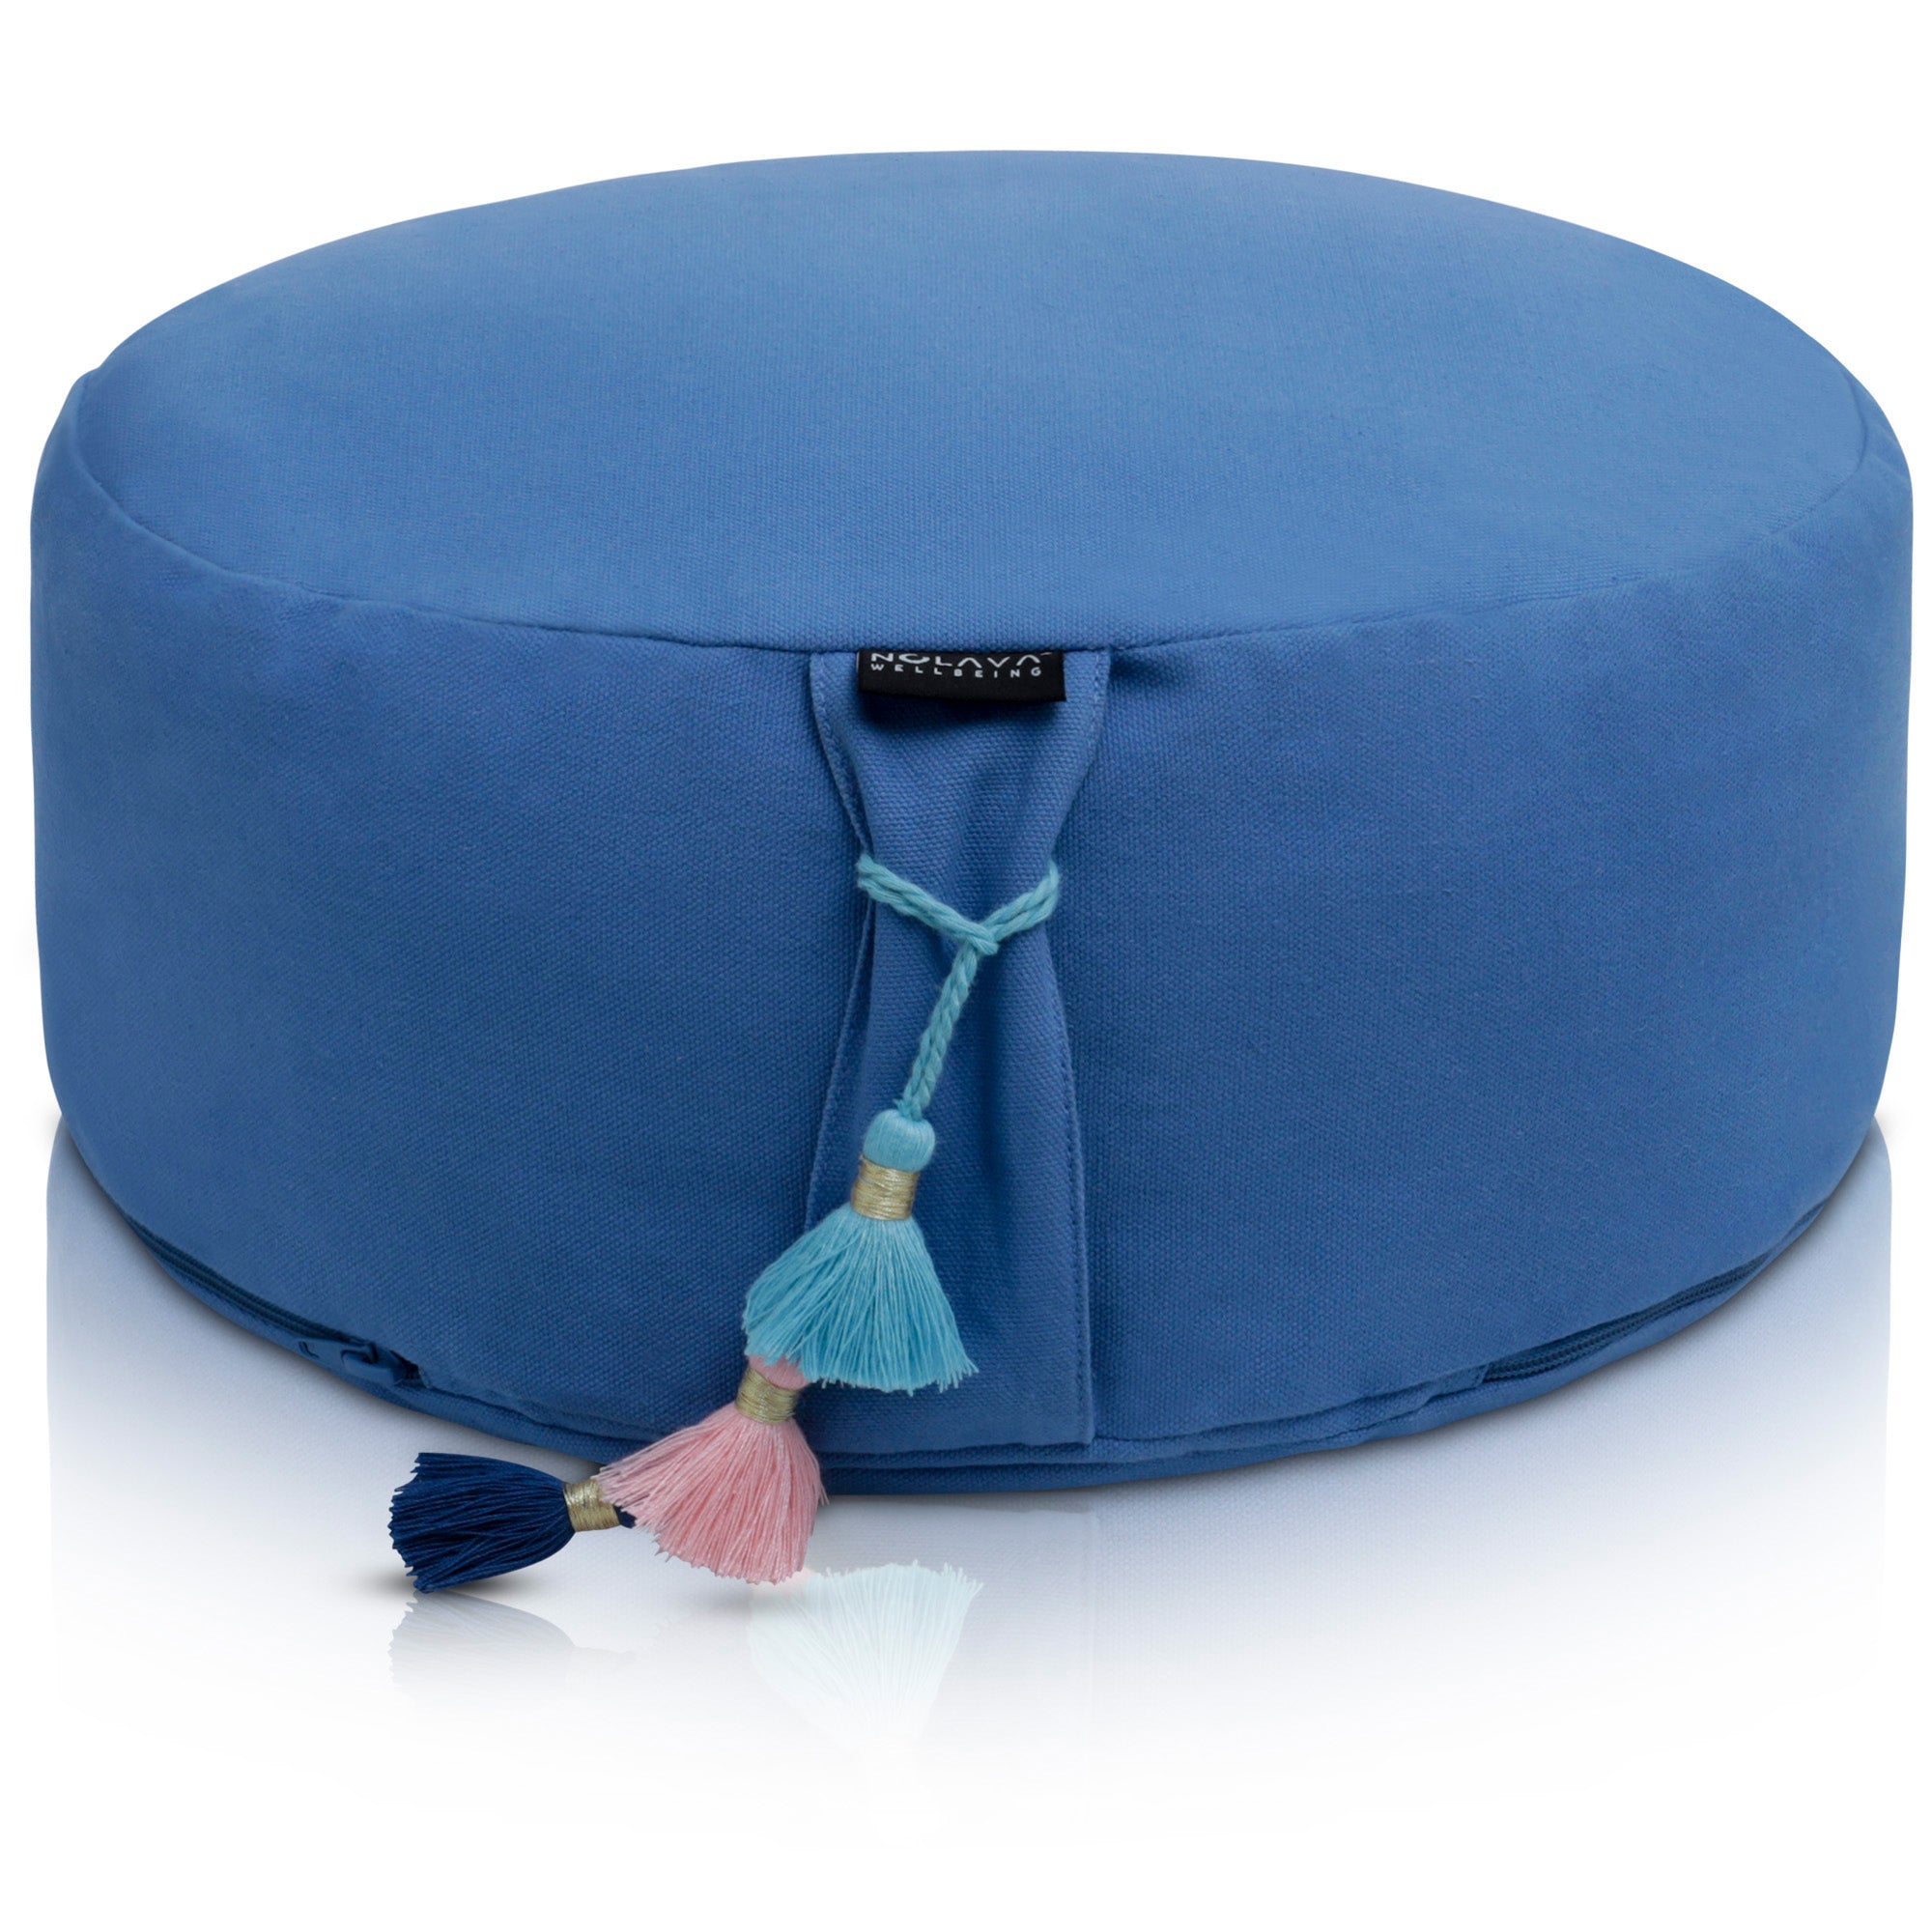 Zafu - Meditation cushion RITA turquoise